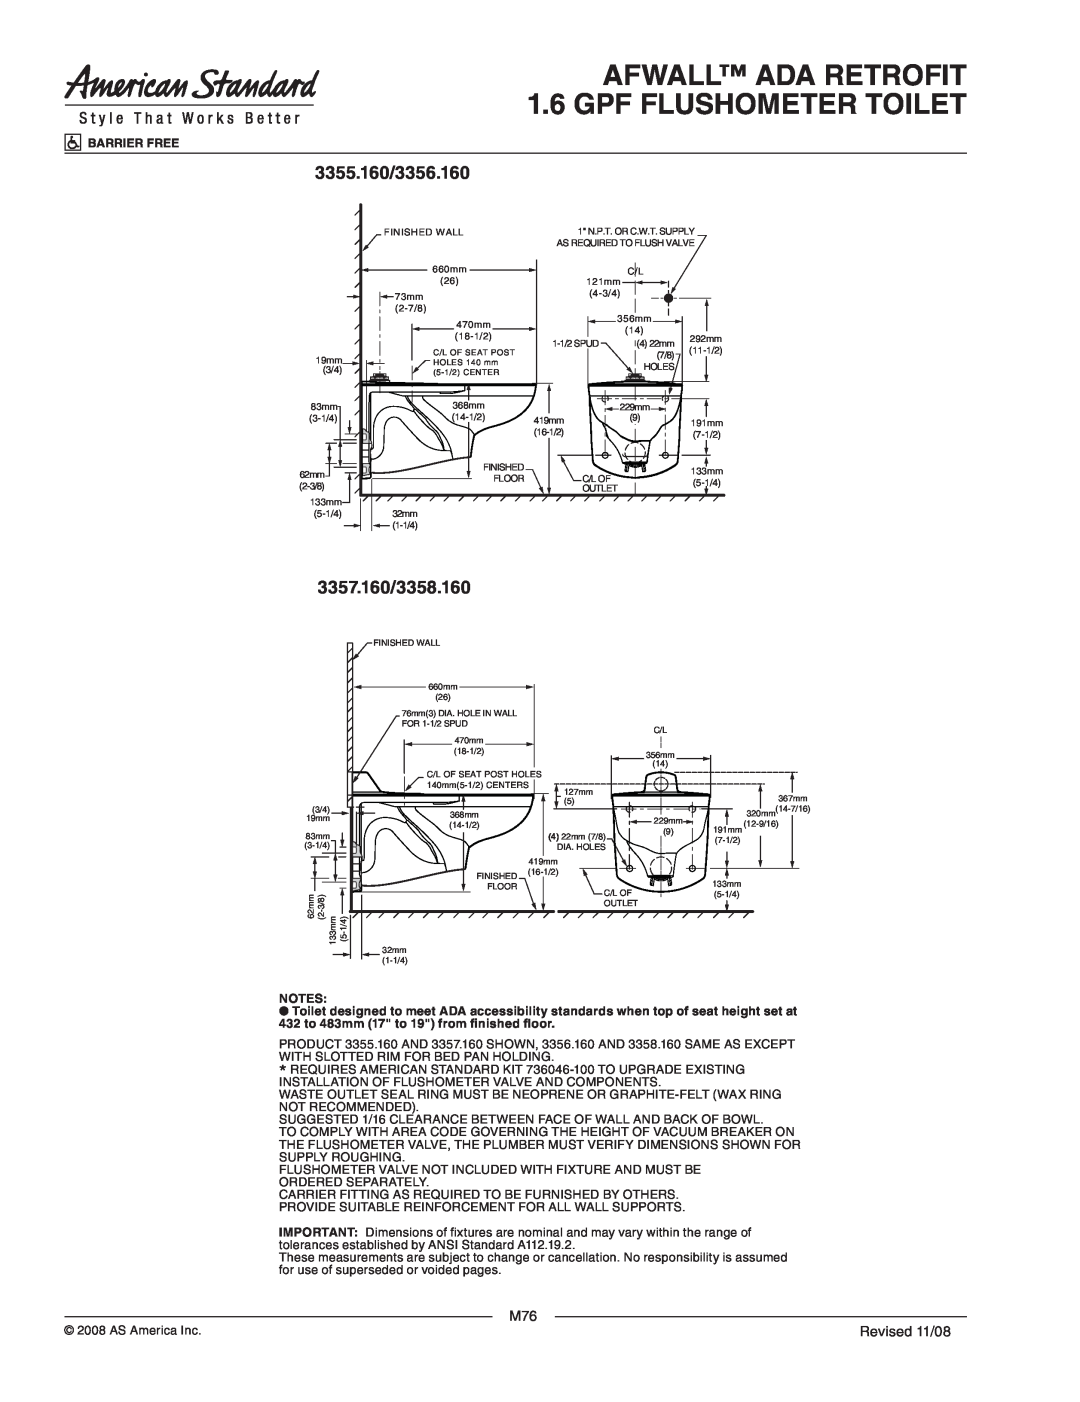 American Standard 3355.160/3356.160, 3357.160/3358.160, AFWALL ADA RETROFIT 1.6 GPF FLUSHOMETER TOILET, Revised 11/08 